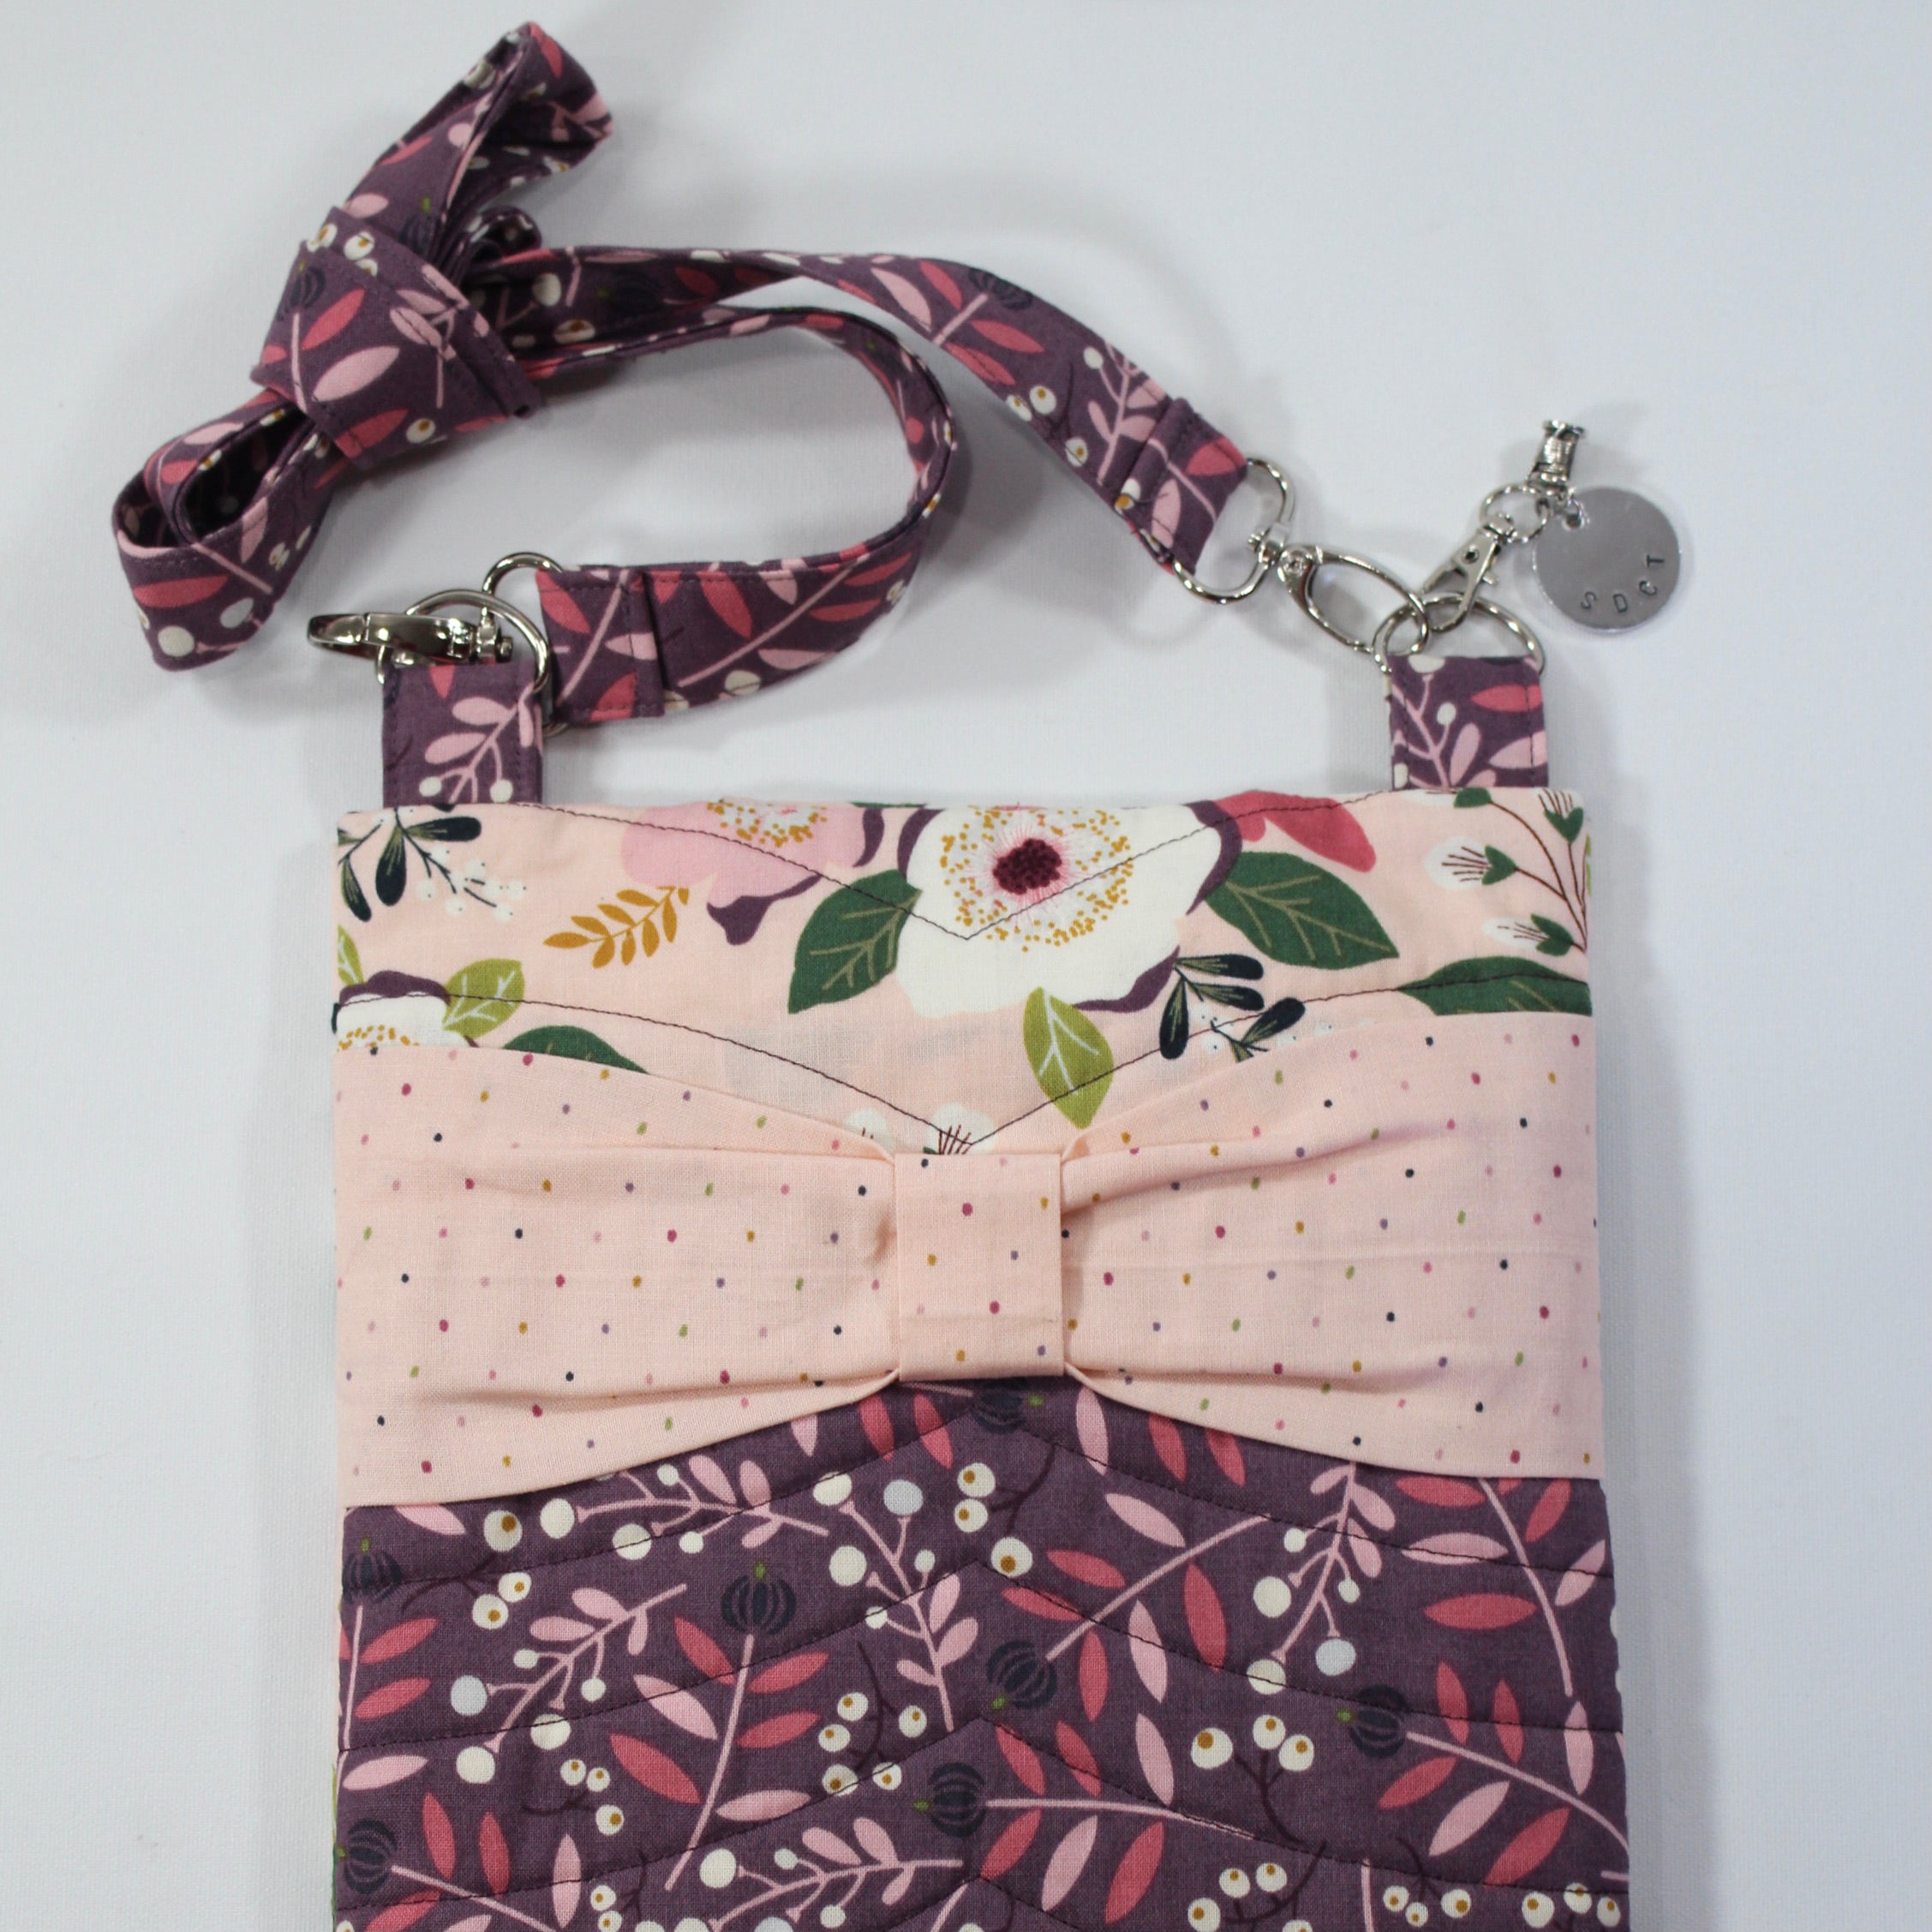 Handmade Bags - "Pretty in Pink Purse"